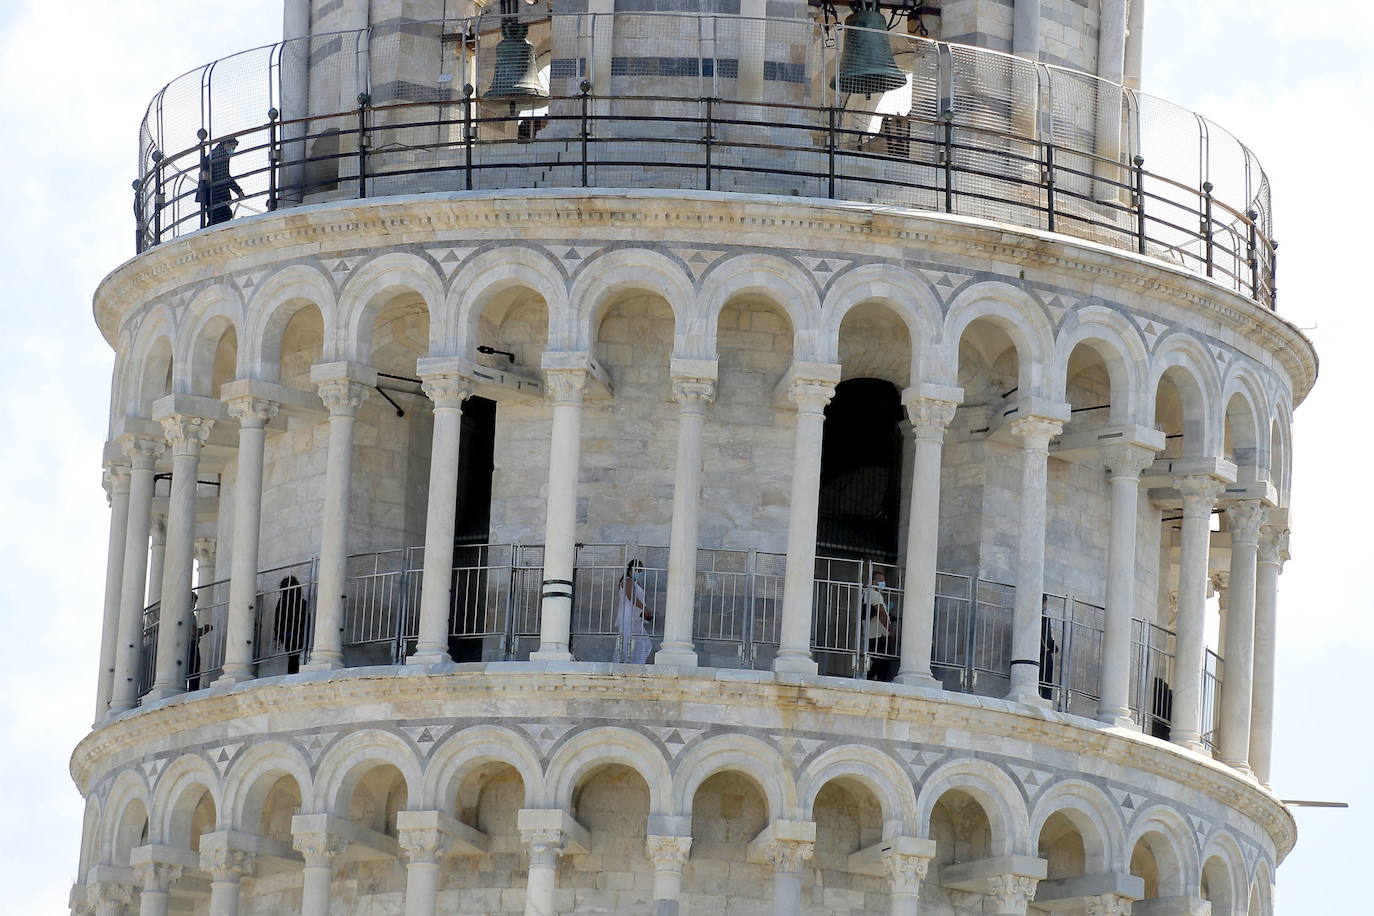 Reabre la Torre inclinada de Pisa: la primera subida tras el coronavirus